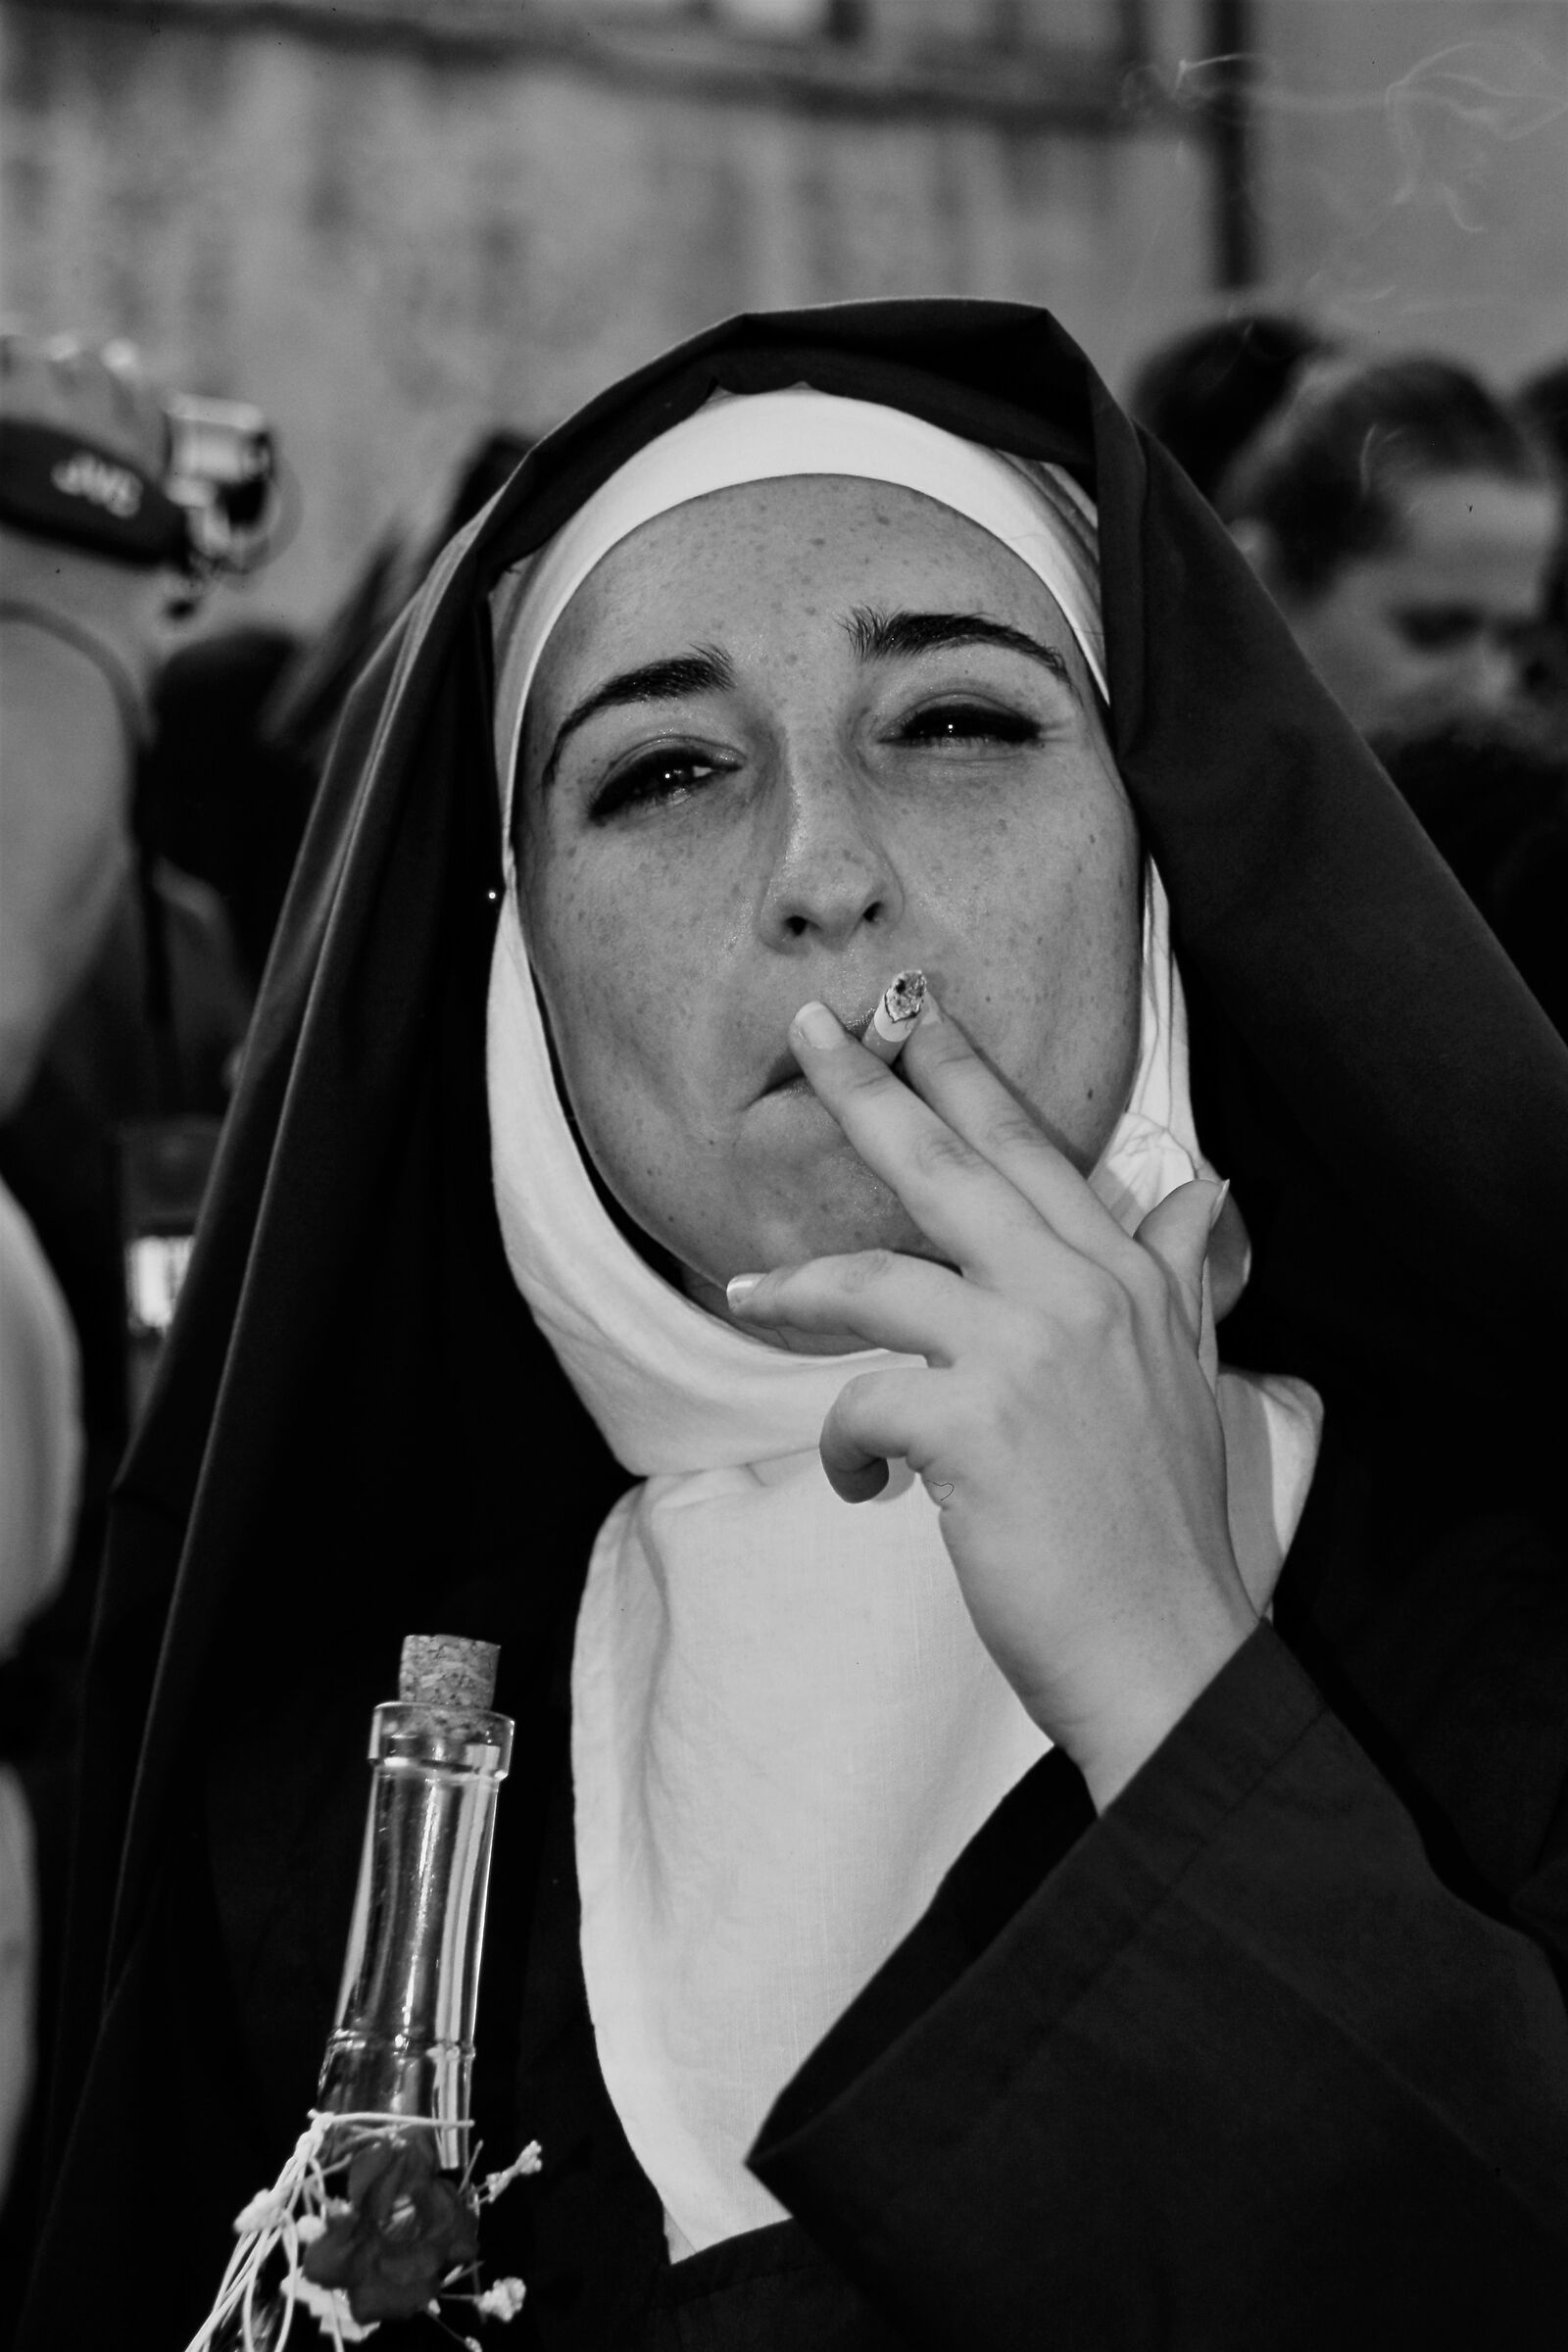 sister smoke (anche le suore fumano)...